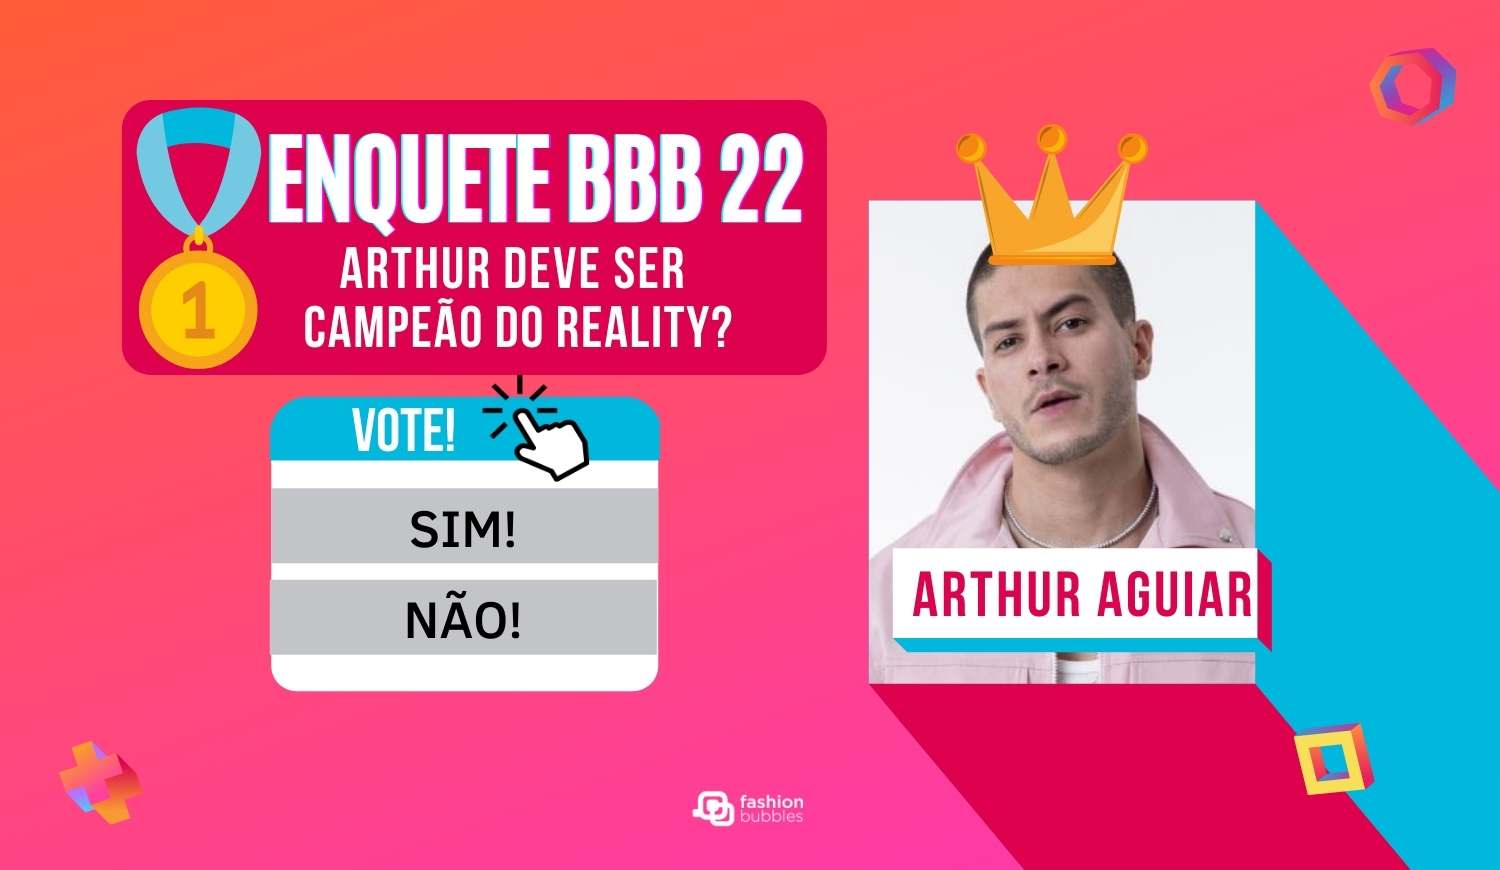 Enquete Final BBB 22: Arthur Aguiar deve ganhar o reality?